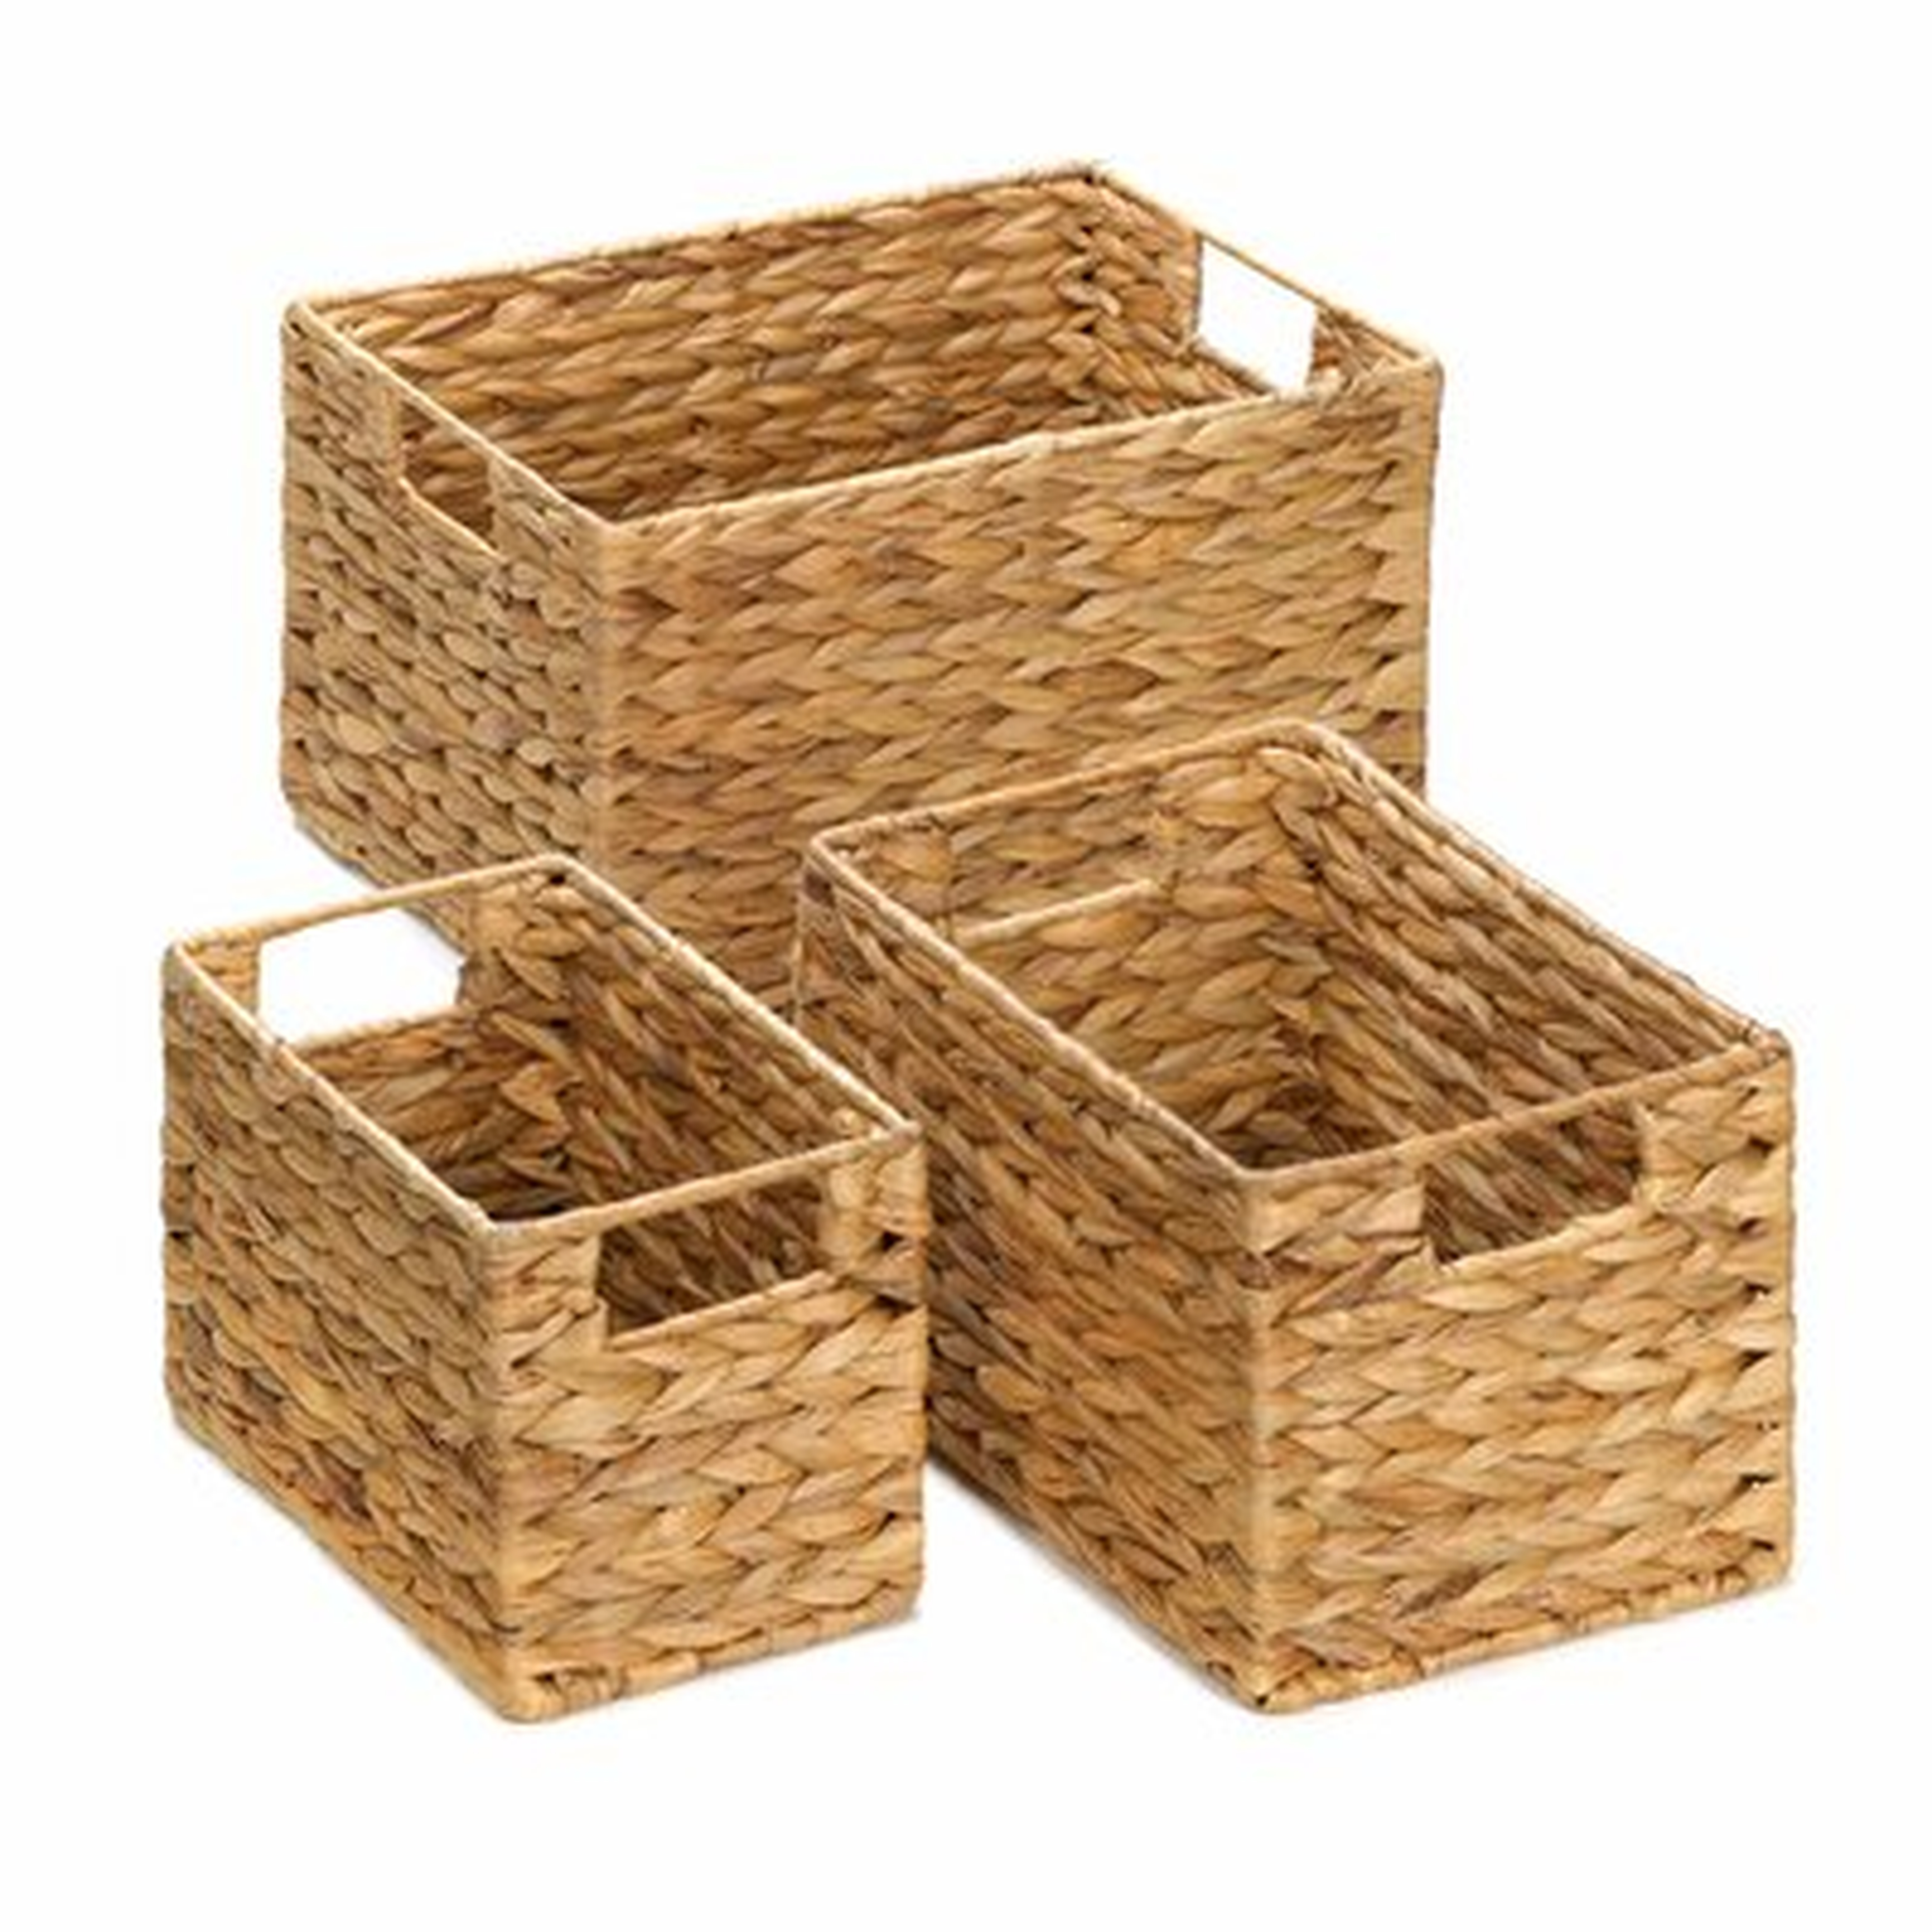 3 Piece Wicker Basket Set - Wayfair